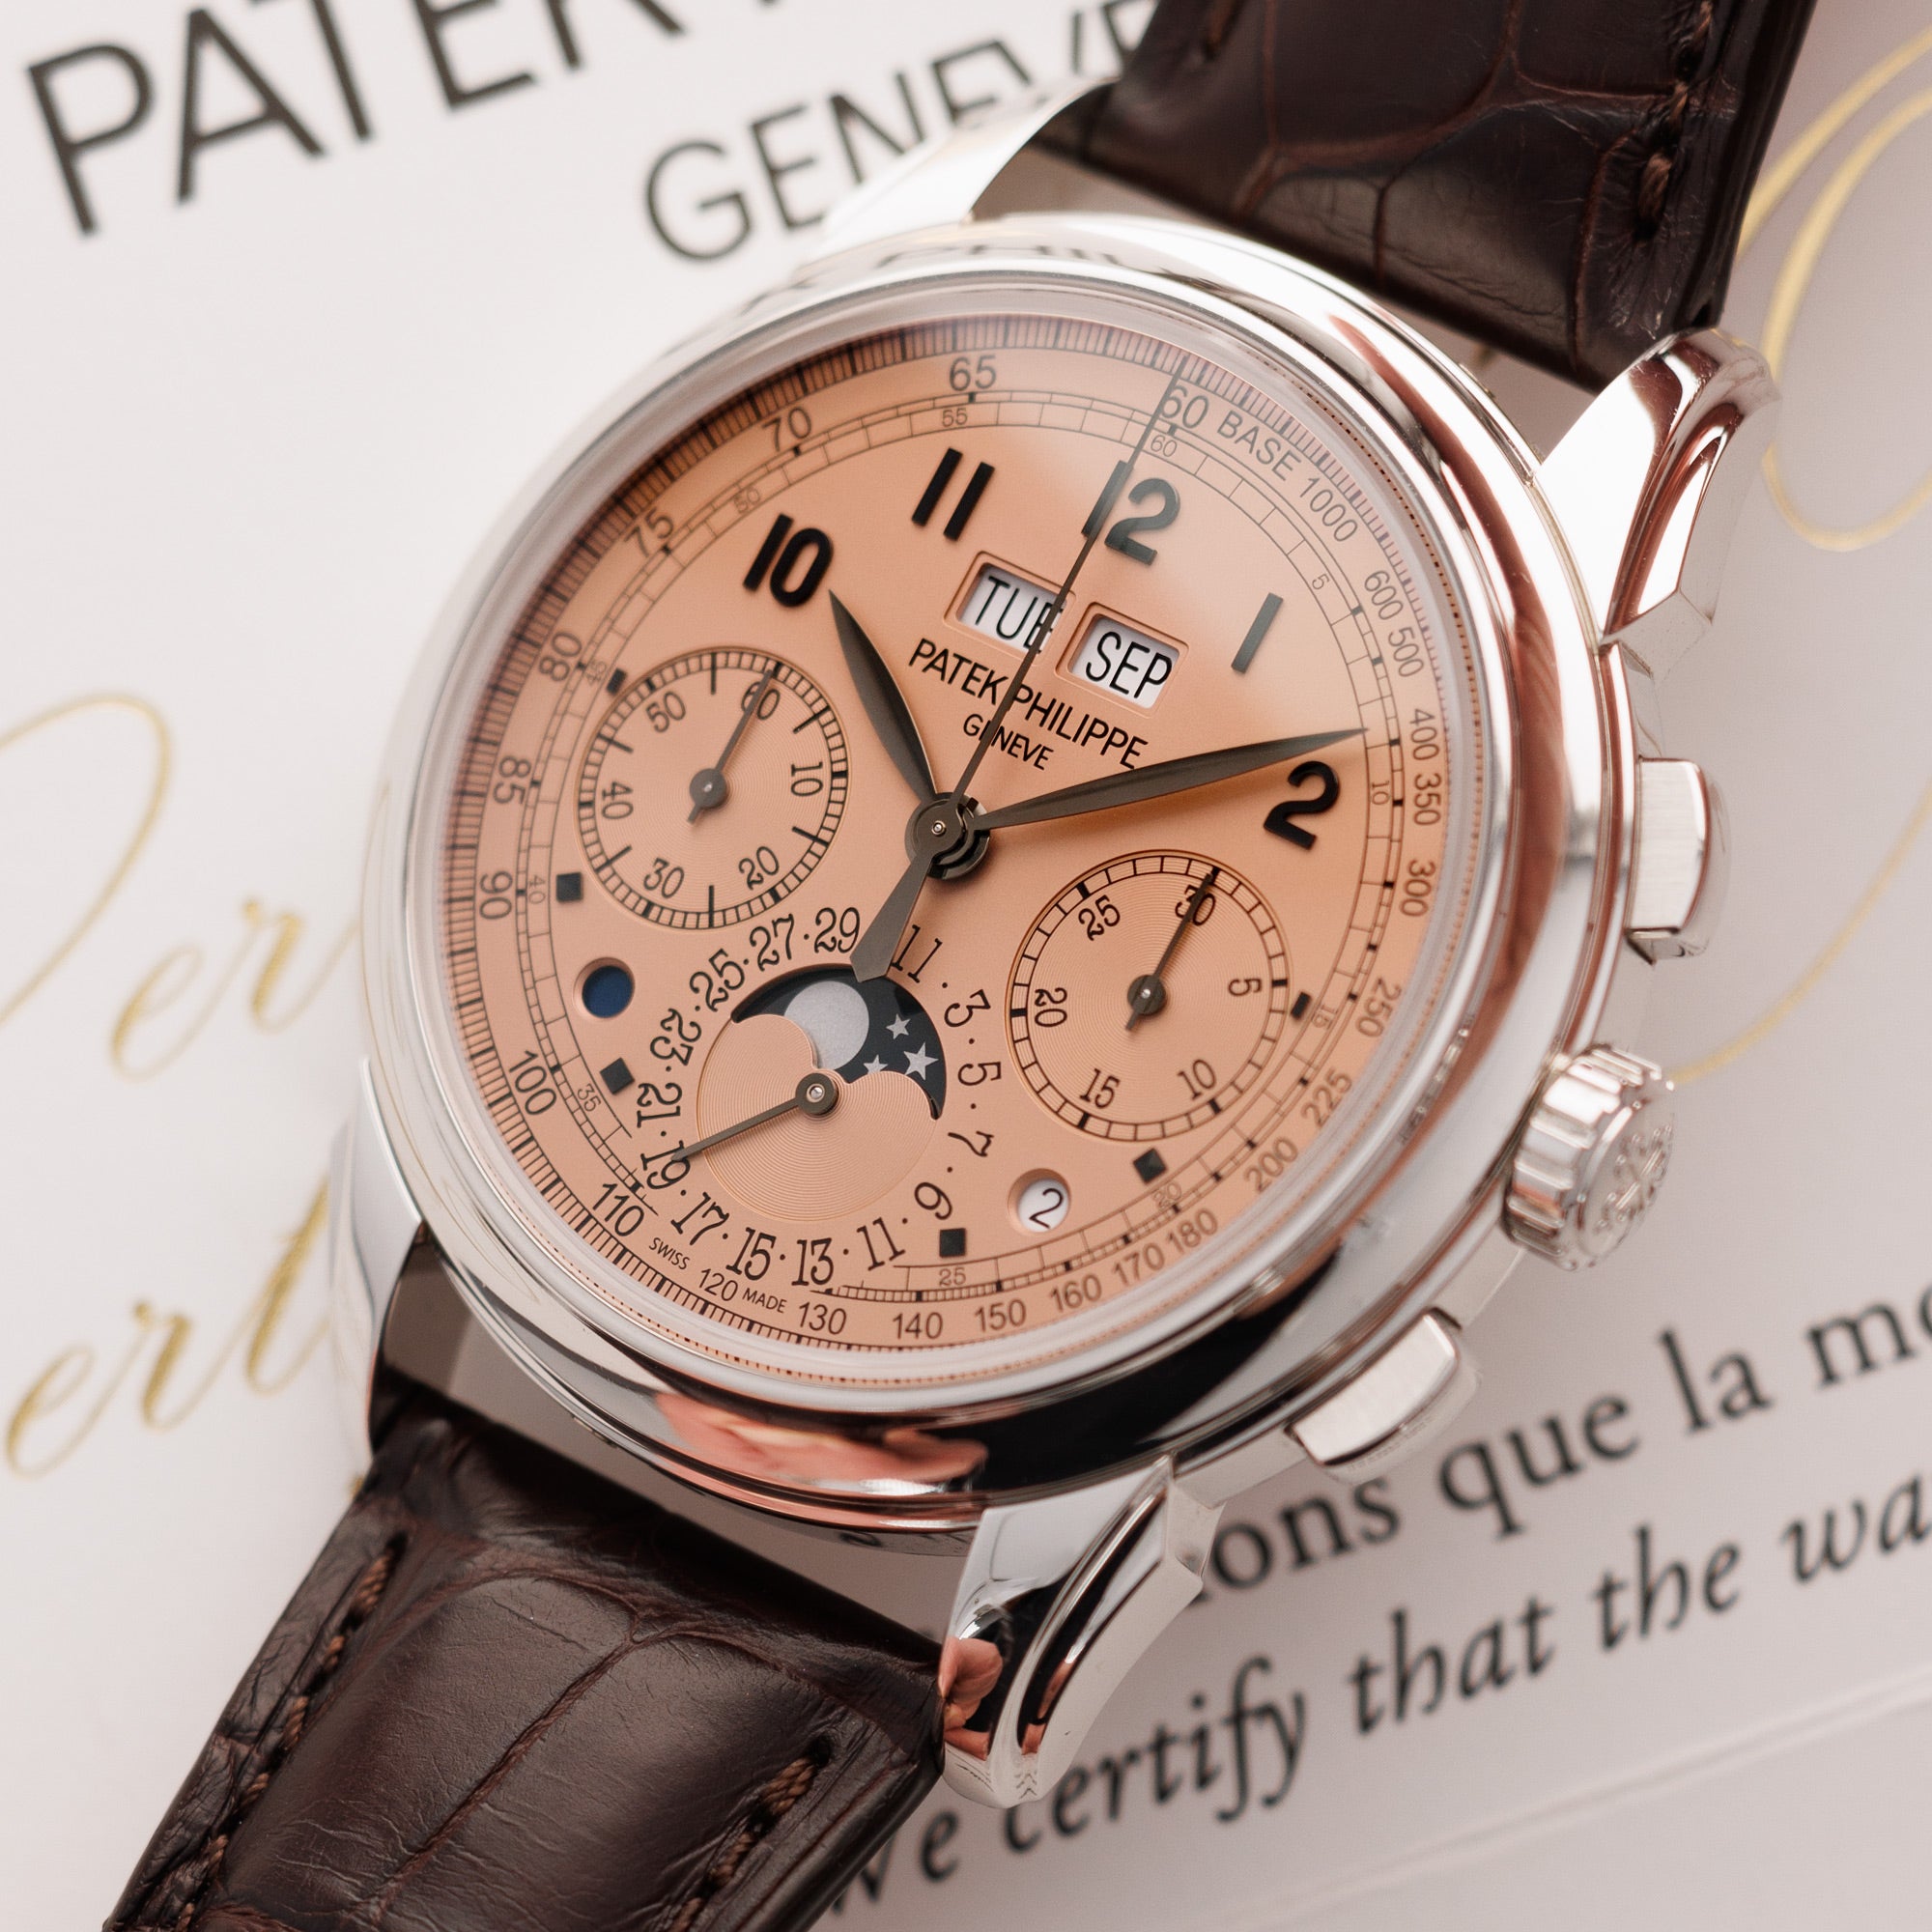 Patek Philippe - Patek Philippe Platinum Perpetual Calendar Watch Ref. 5270 - The Keystone Watches